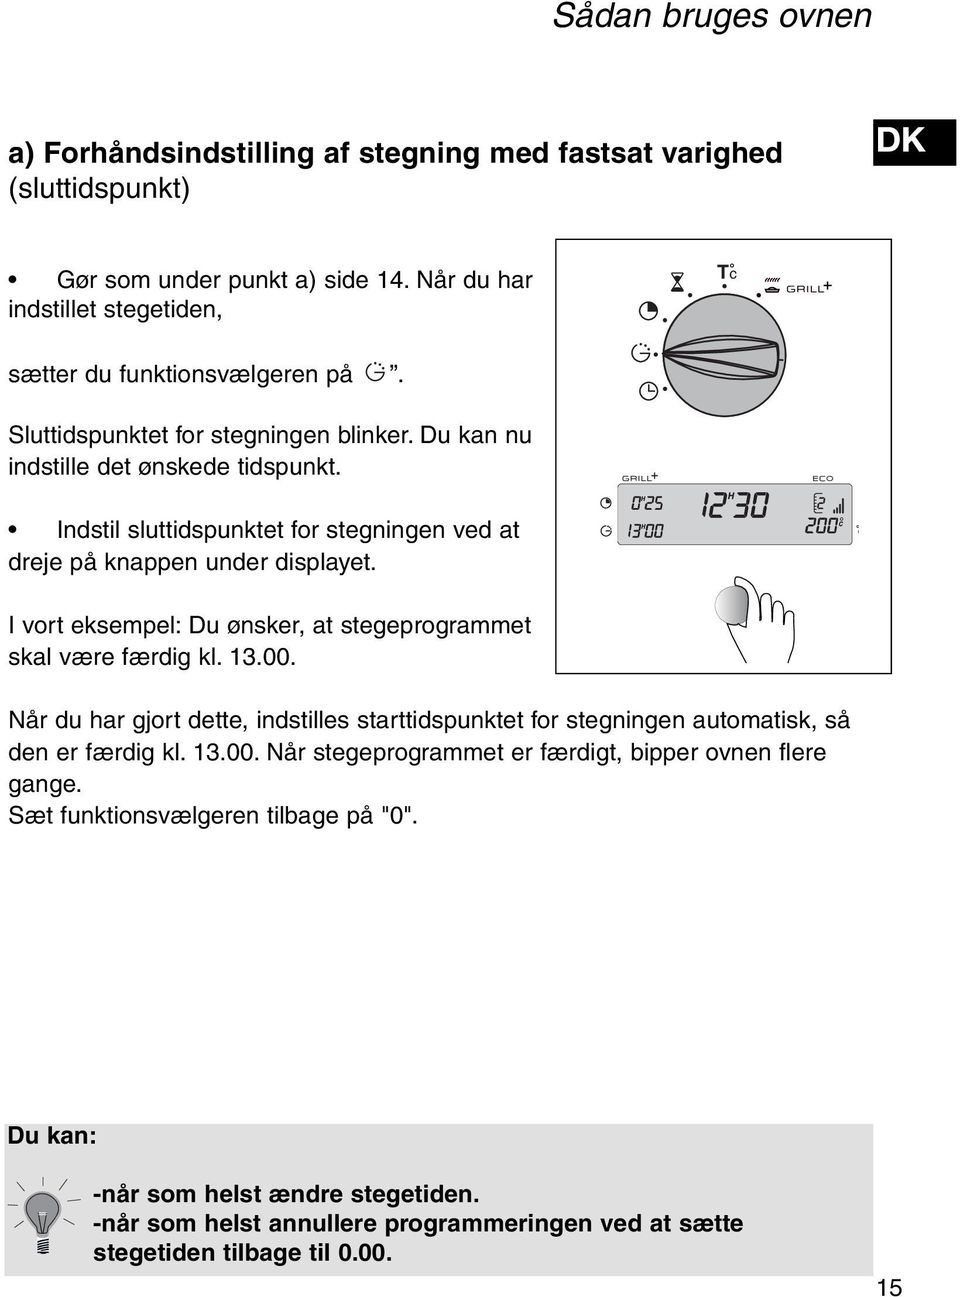 Brugsanvisning til ovn - PDF Ilmainen lataus